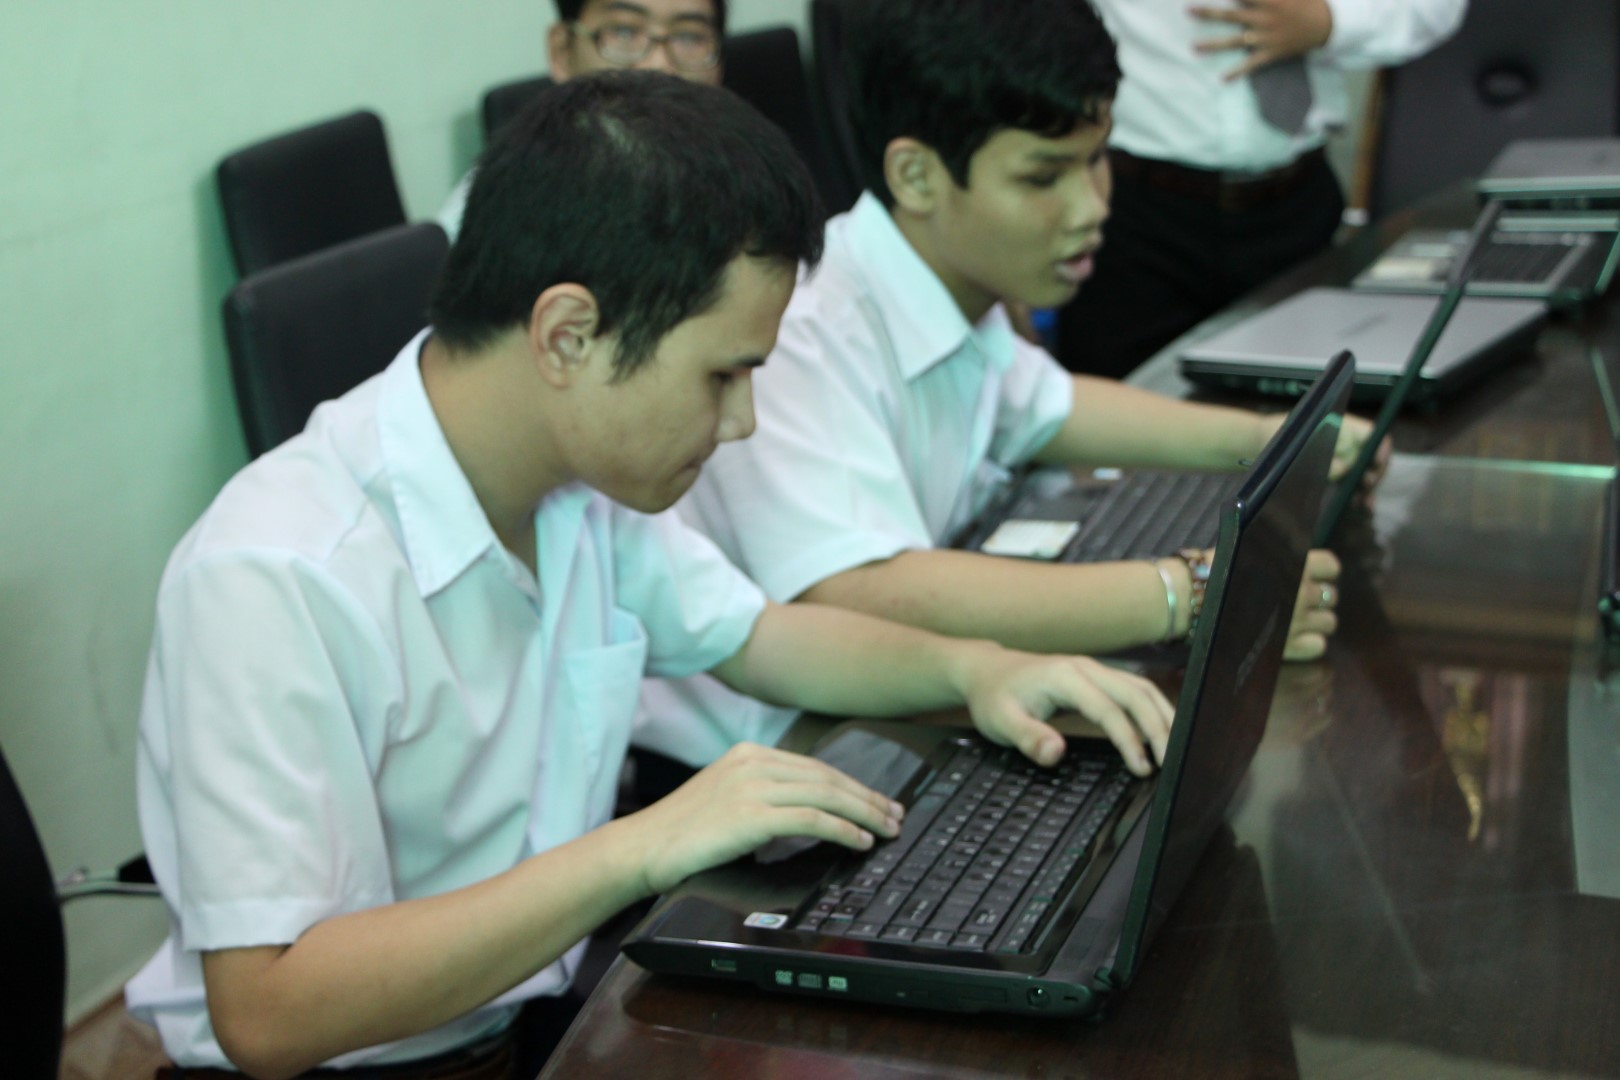 DEK Foundation donates laptops to blind kids